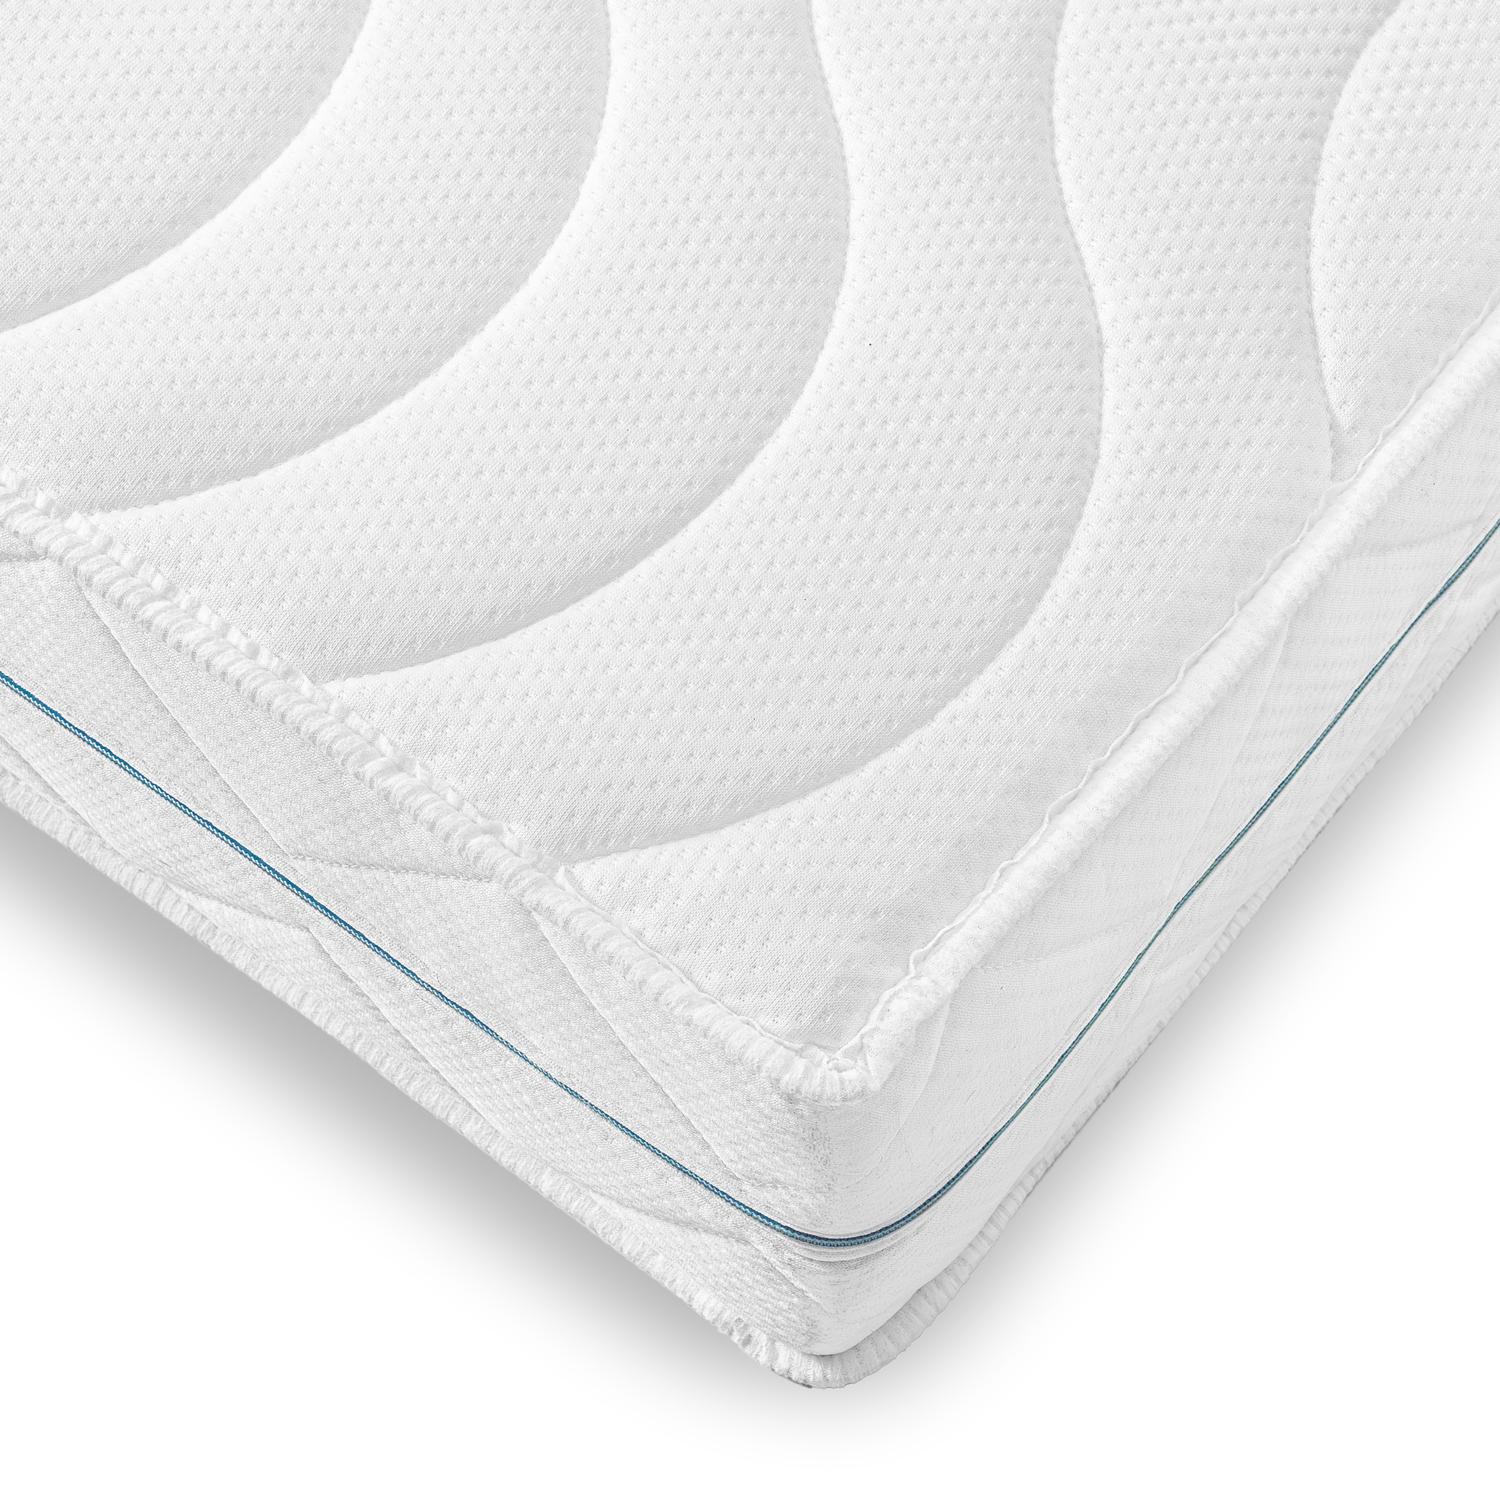 Supportho Premium madrassöverdrag 90 x 200 cm, höjd 18 cm